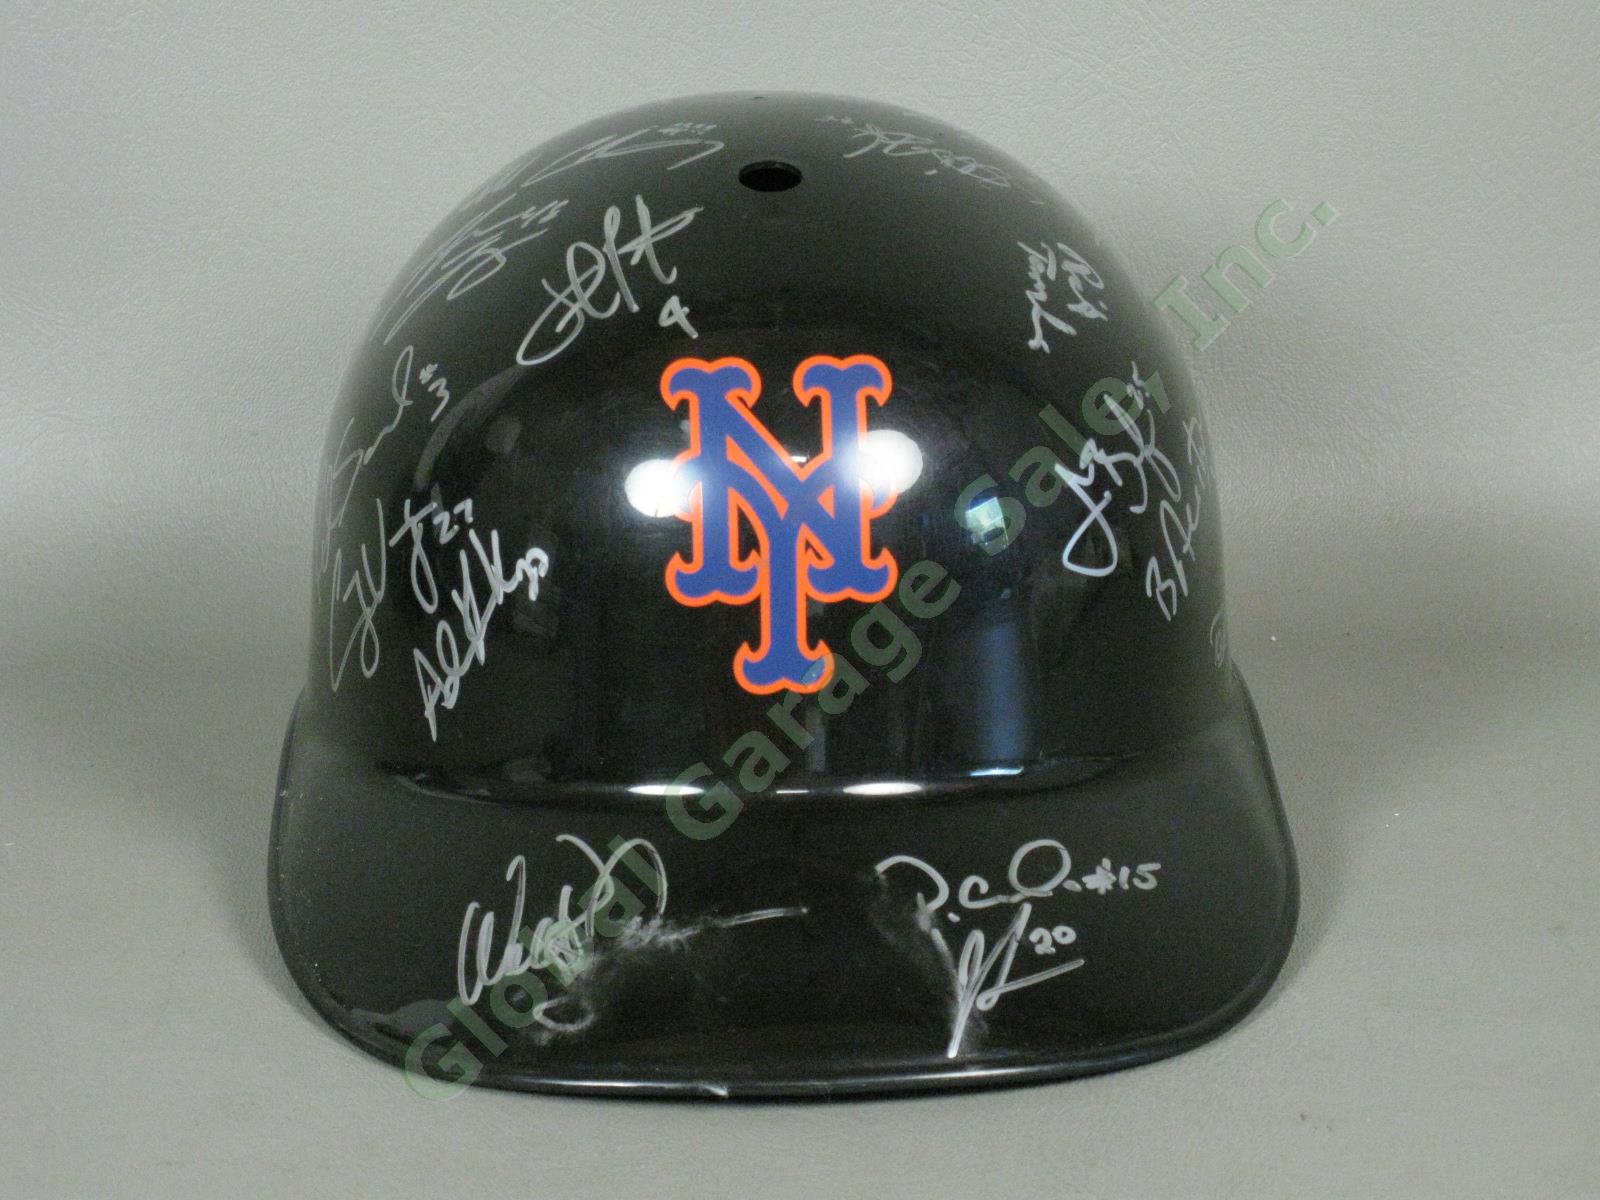 2010 Brooklyn Cyclones Team Signed Baseball Helmet MiLB MLB NYPL New York Mets